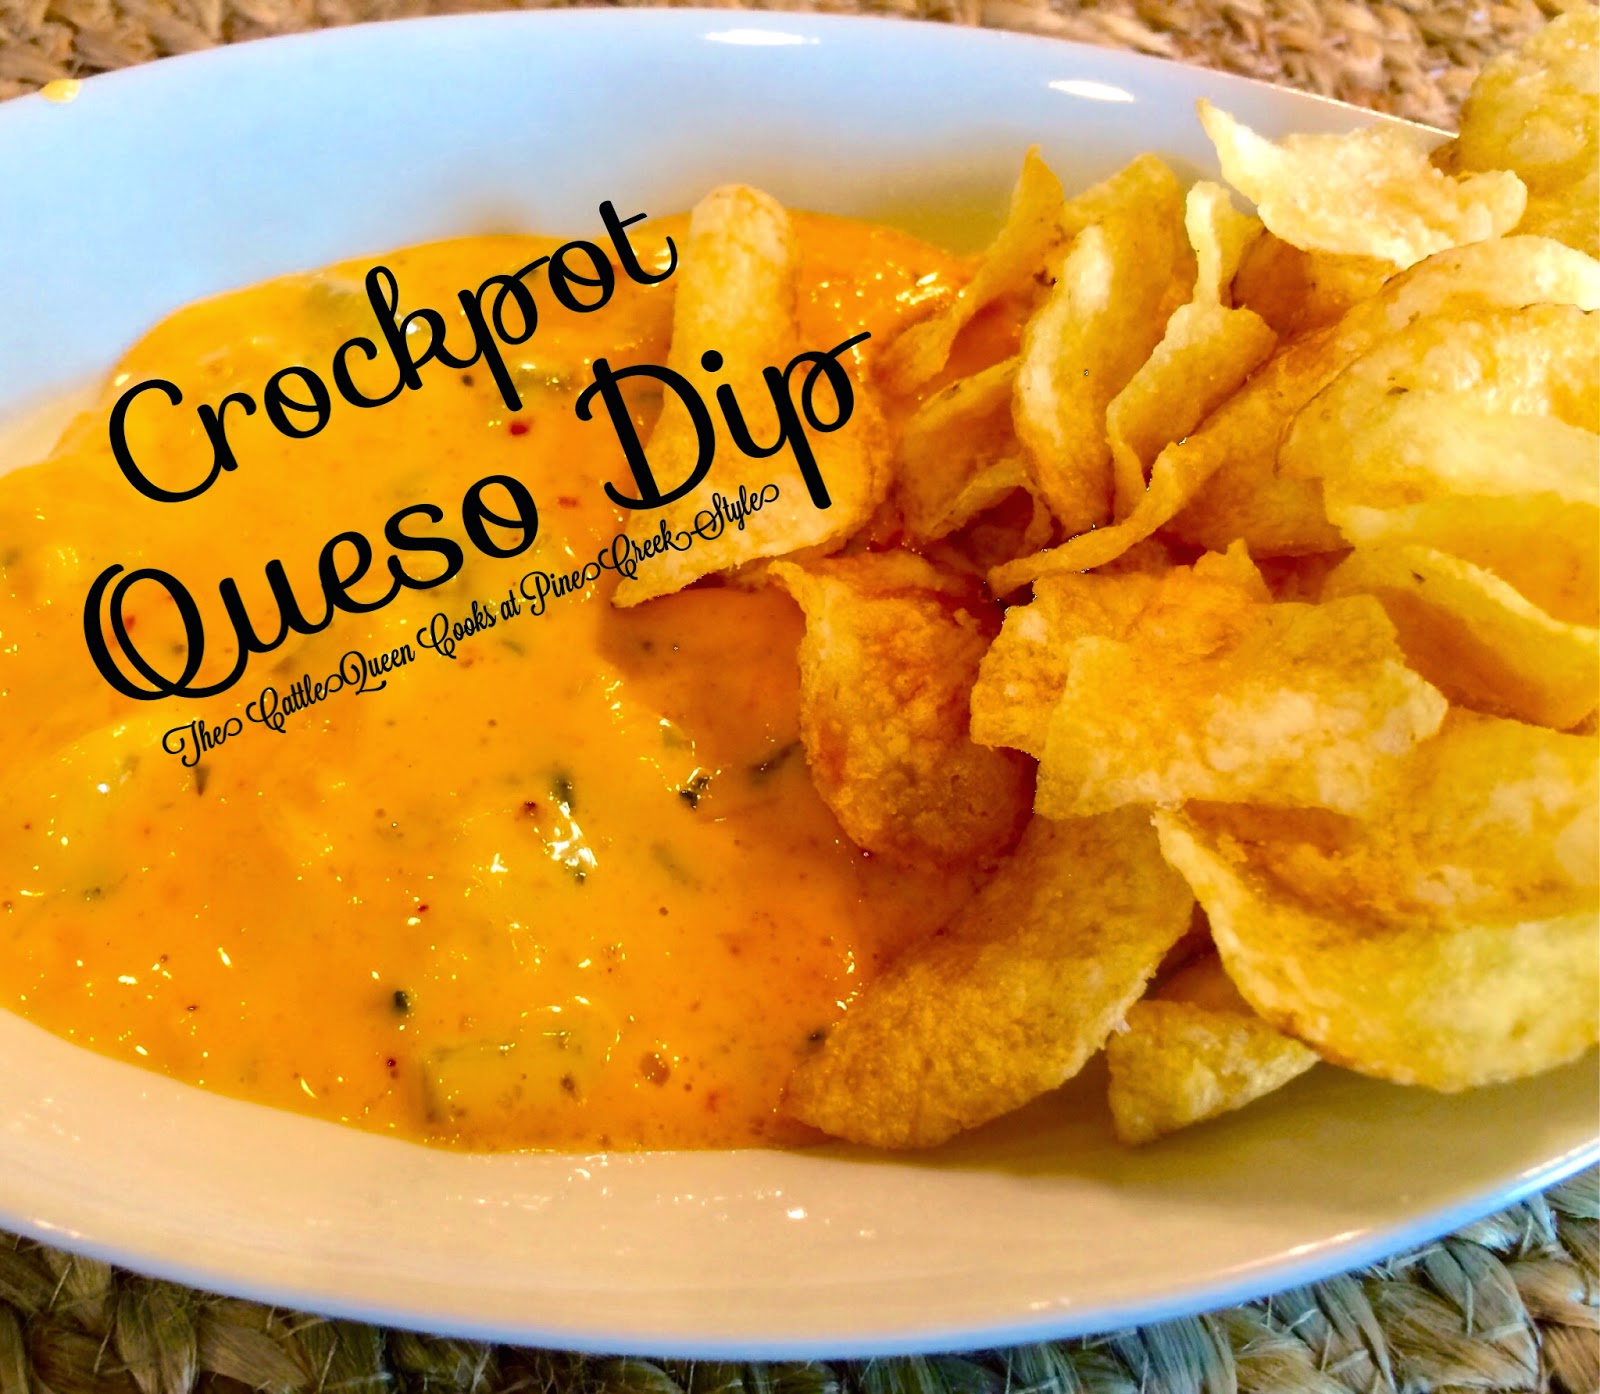 Pine Creek Style: Crockpot Queso Dip...